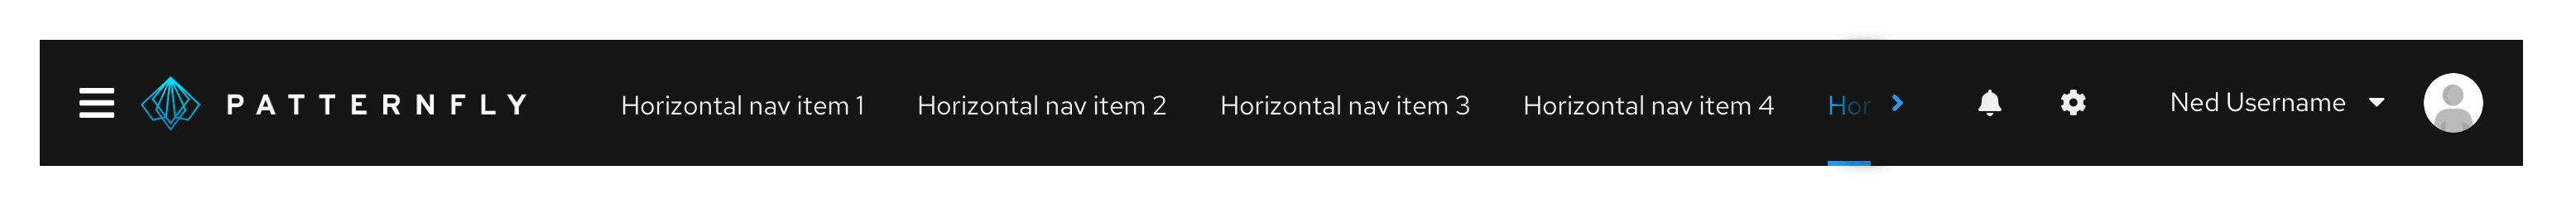 Example of horizontal navigation